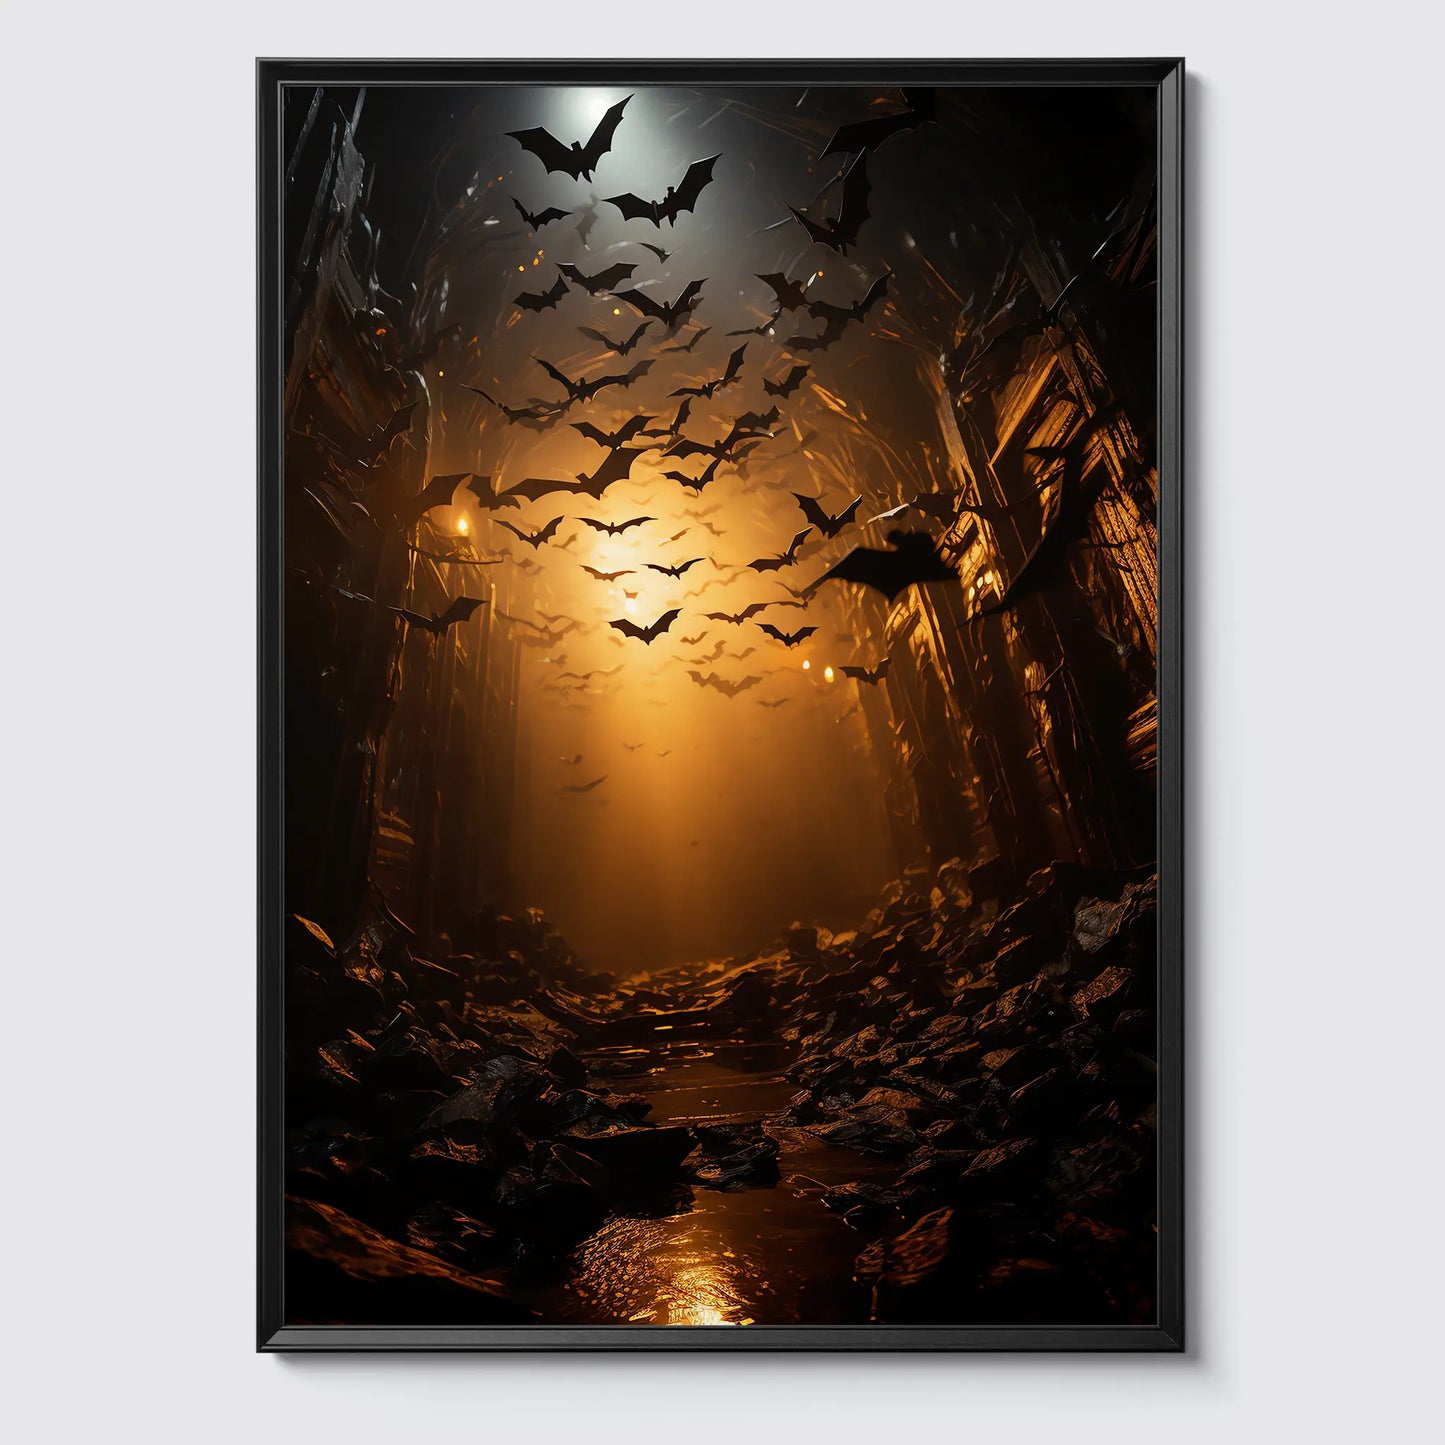 Bats No 3 - Halloween - Poster